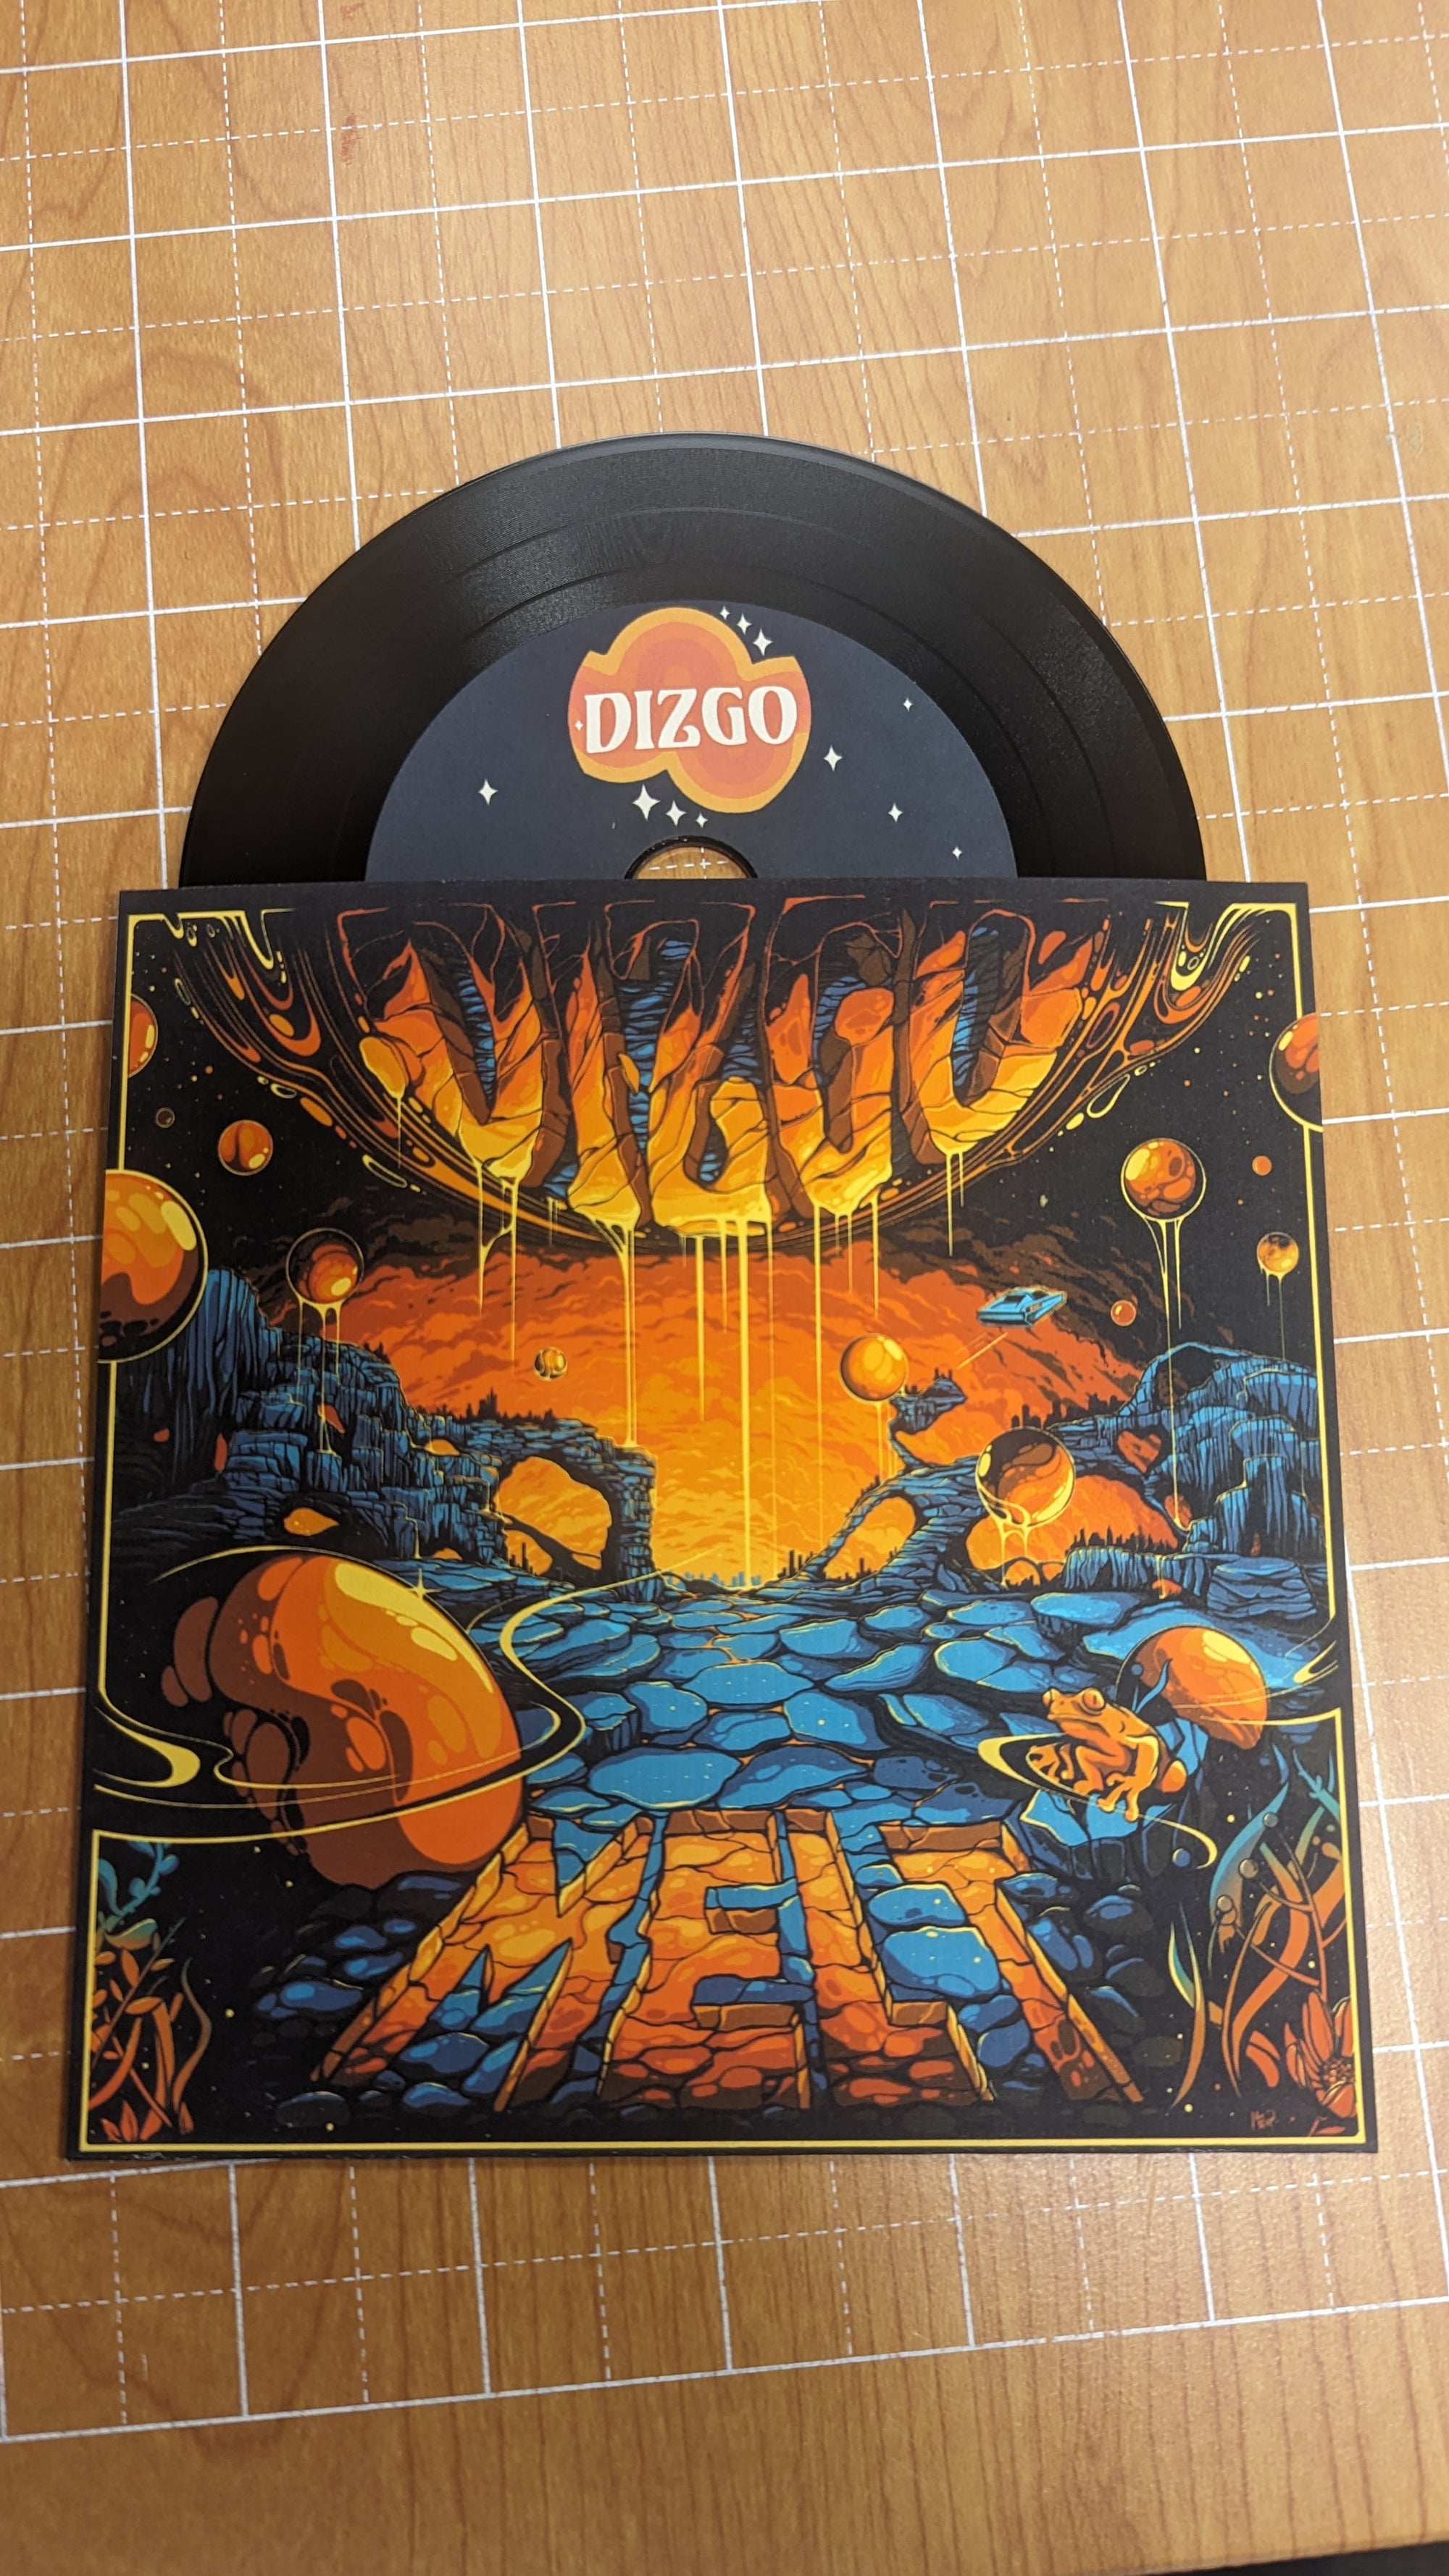 "Melt" by Dizgo - CD